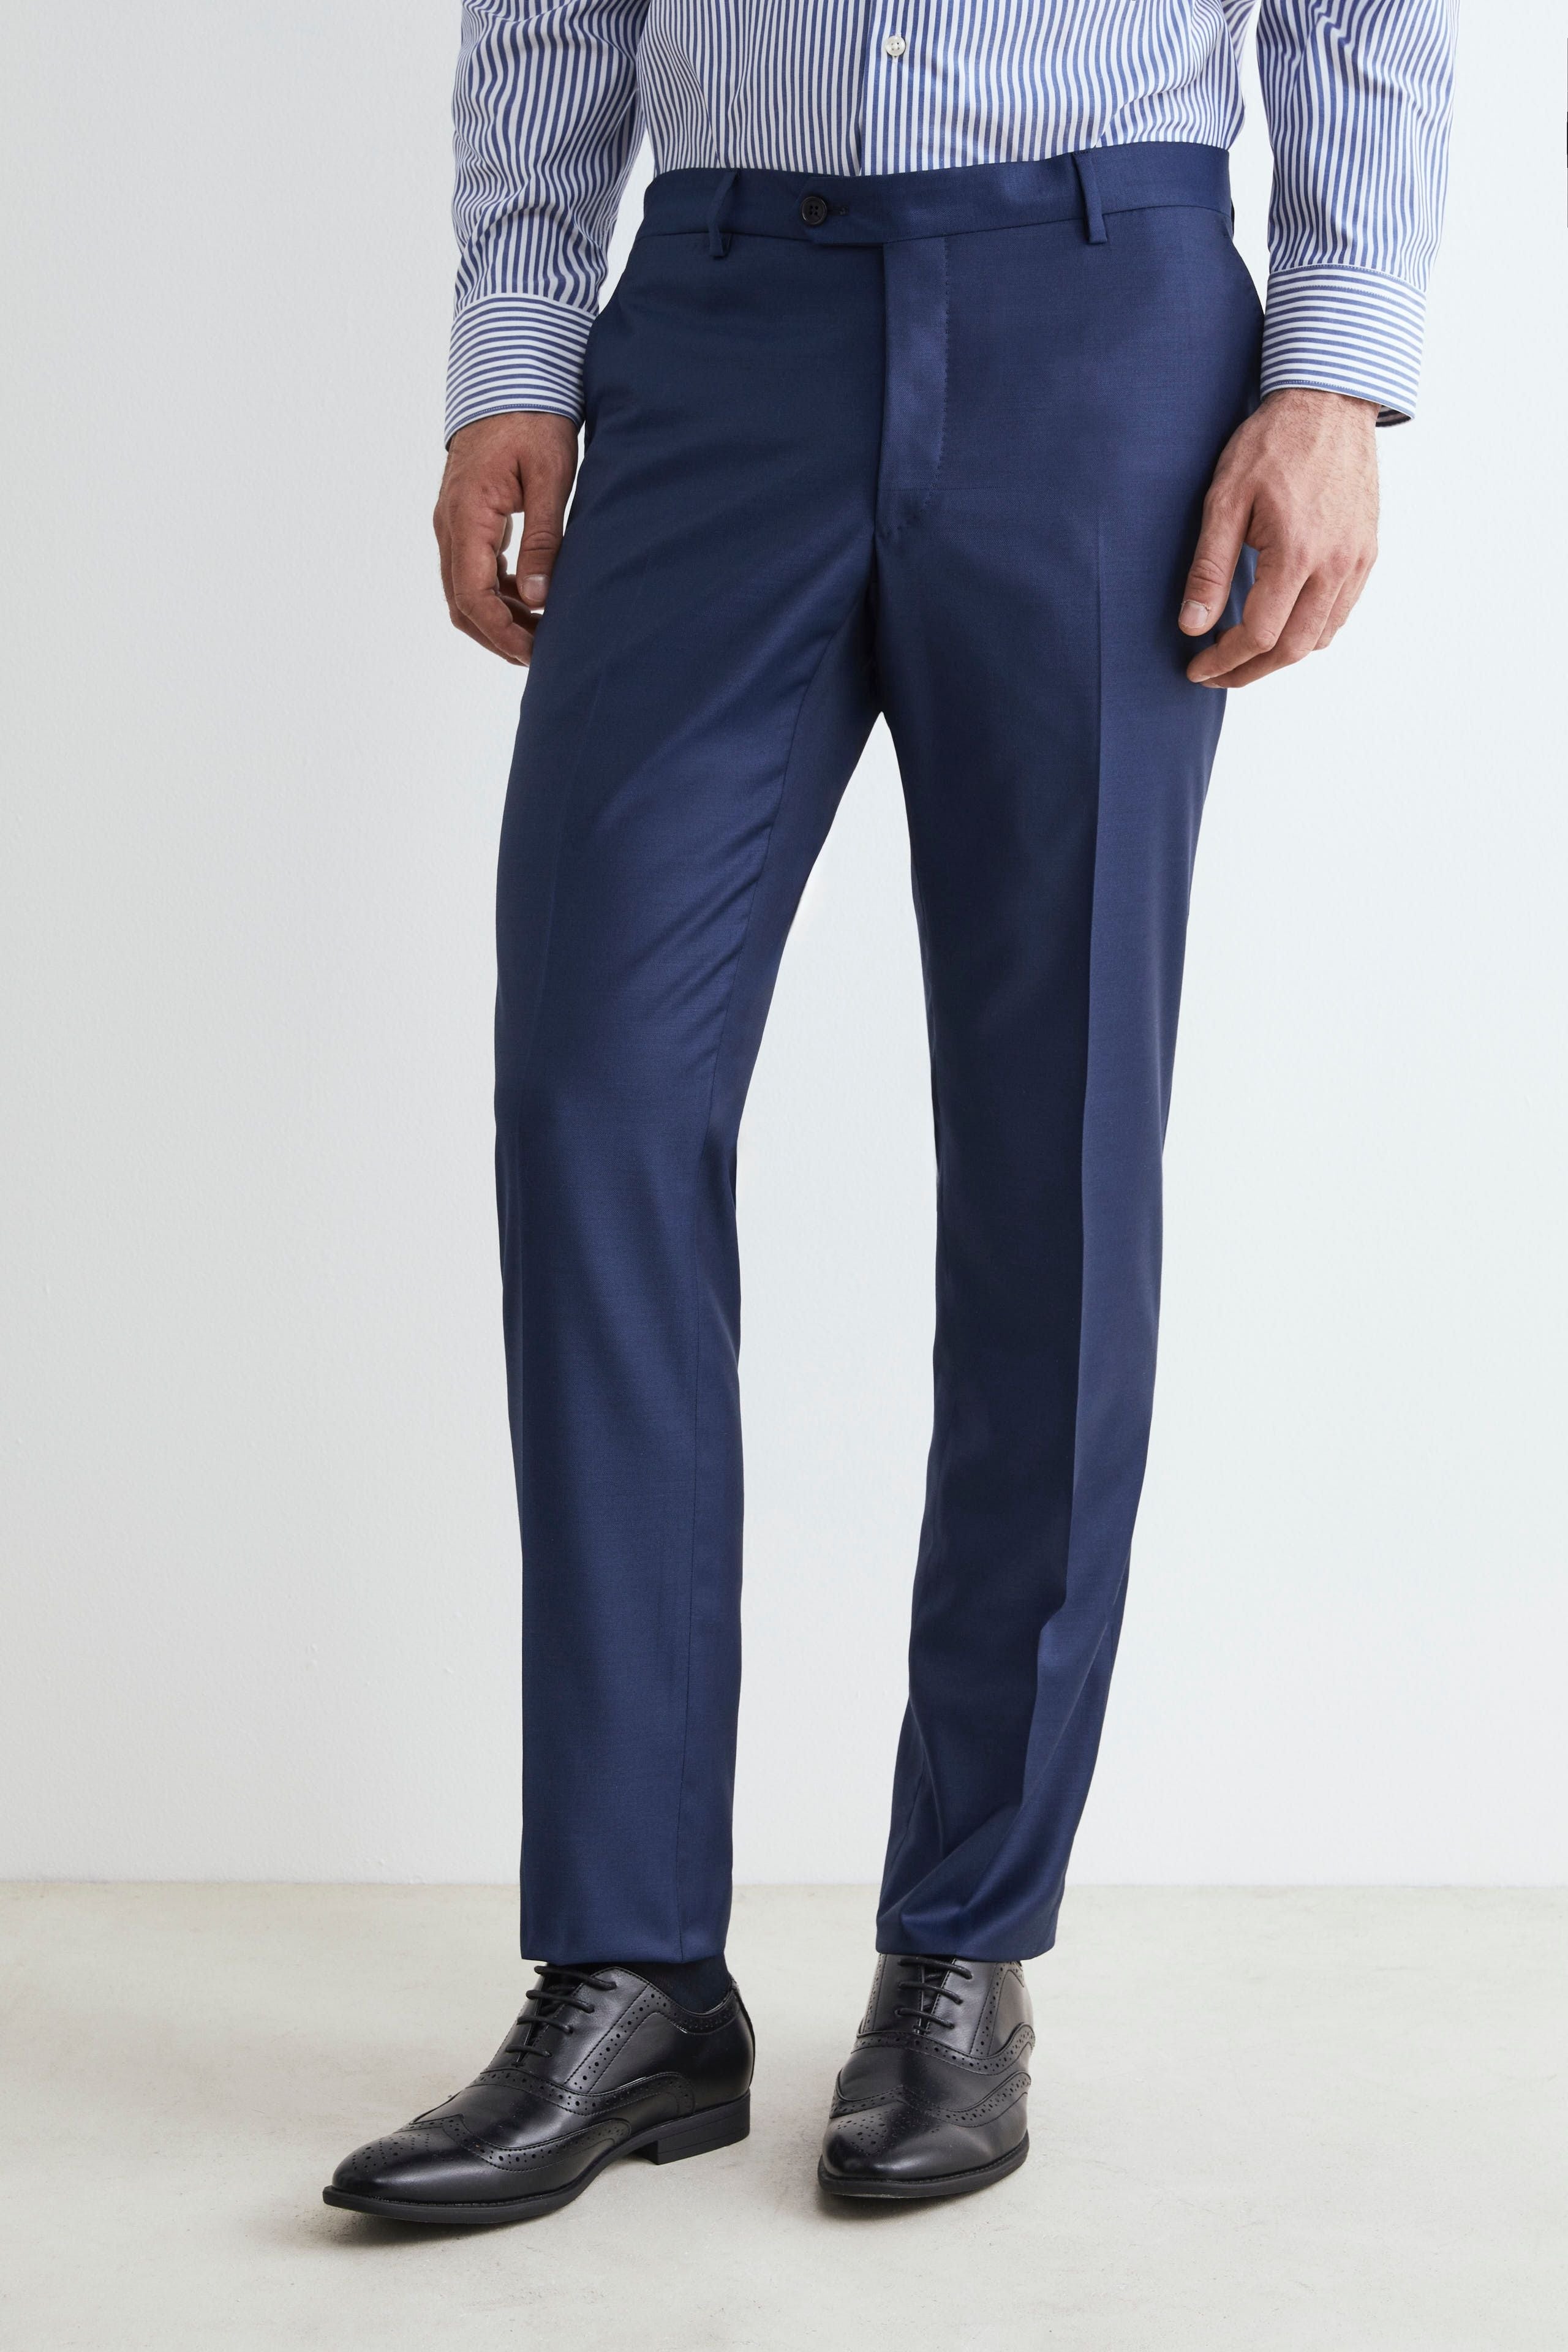 Pantalone elegante drop 4 - BLU